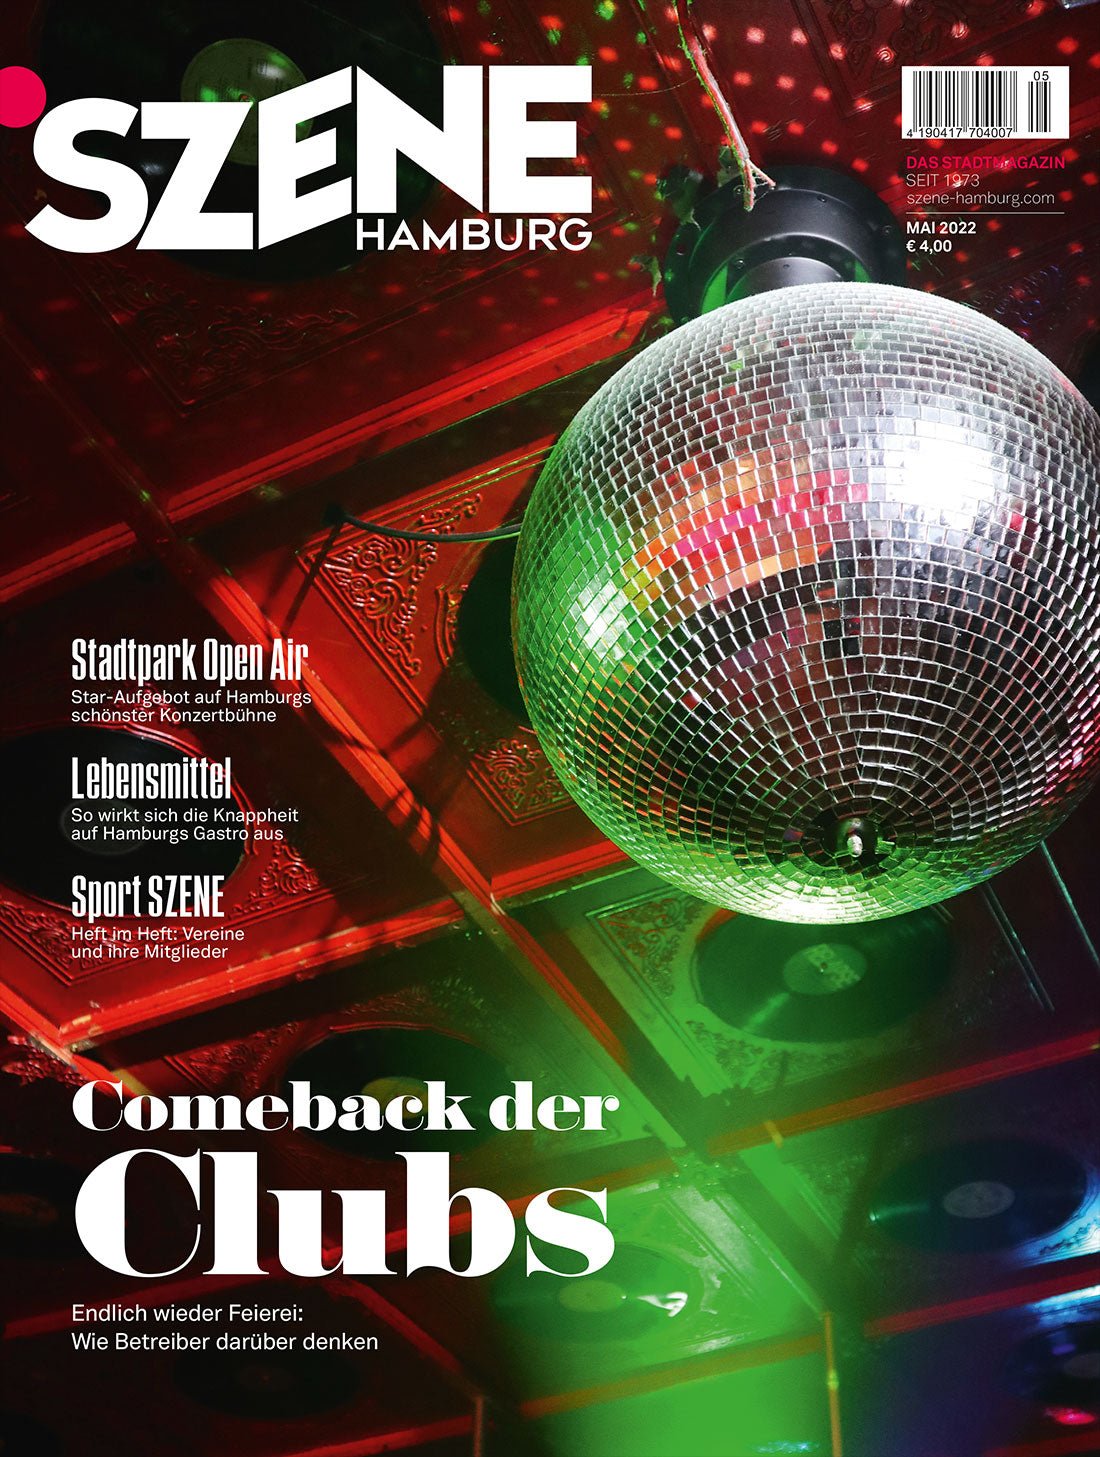 SZENE HAMBURG 05/2022 „Comeback der Clubs“ - SZENE HAMBURG Shop